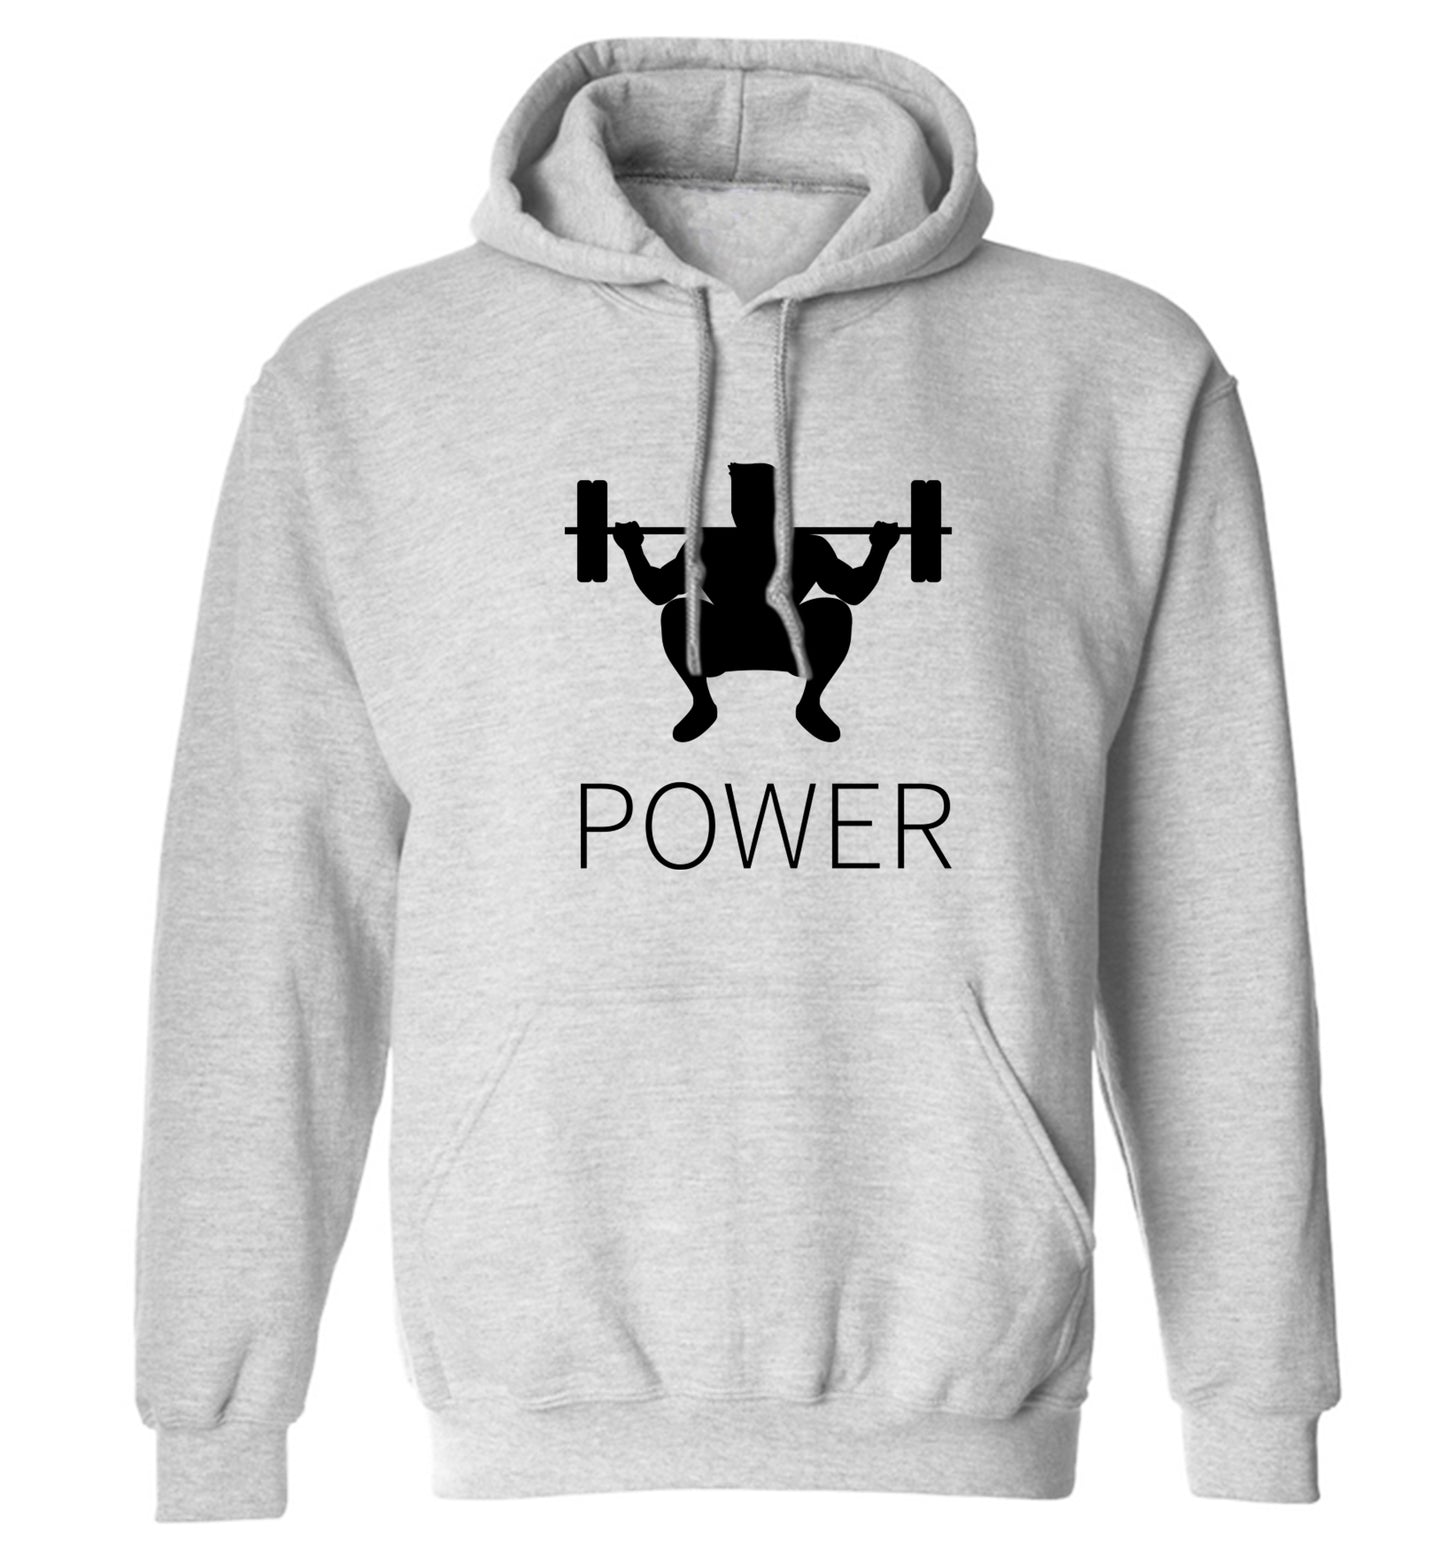 Lift power adults unisex grey hoodie 2XL